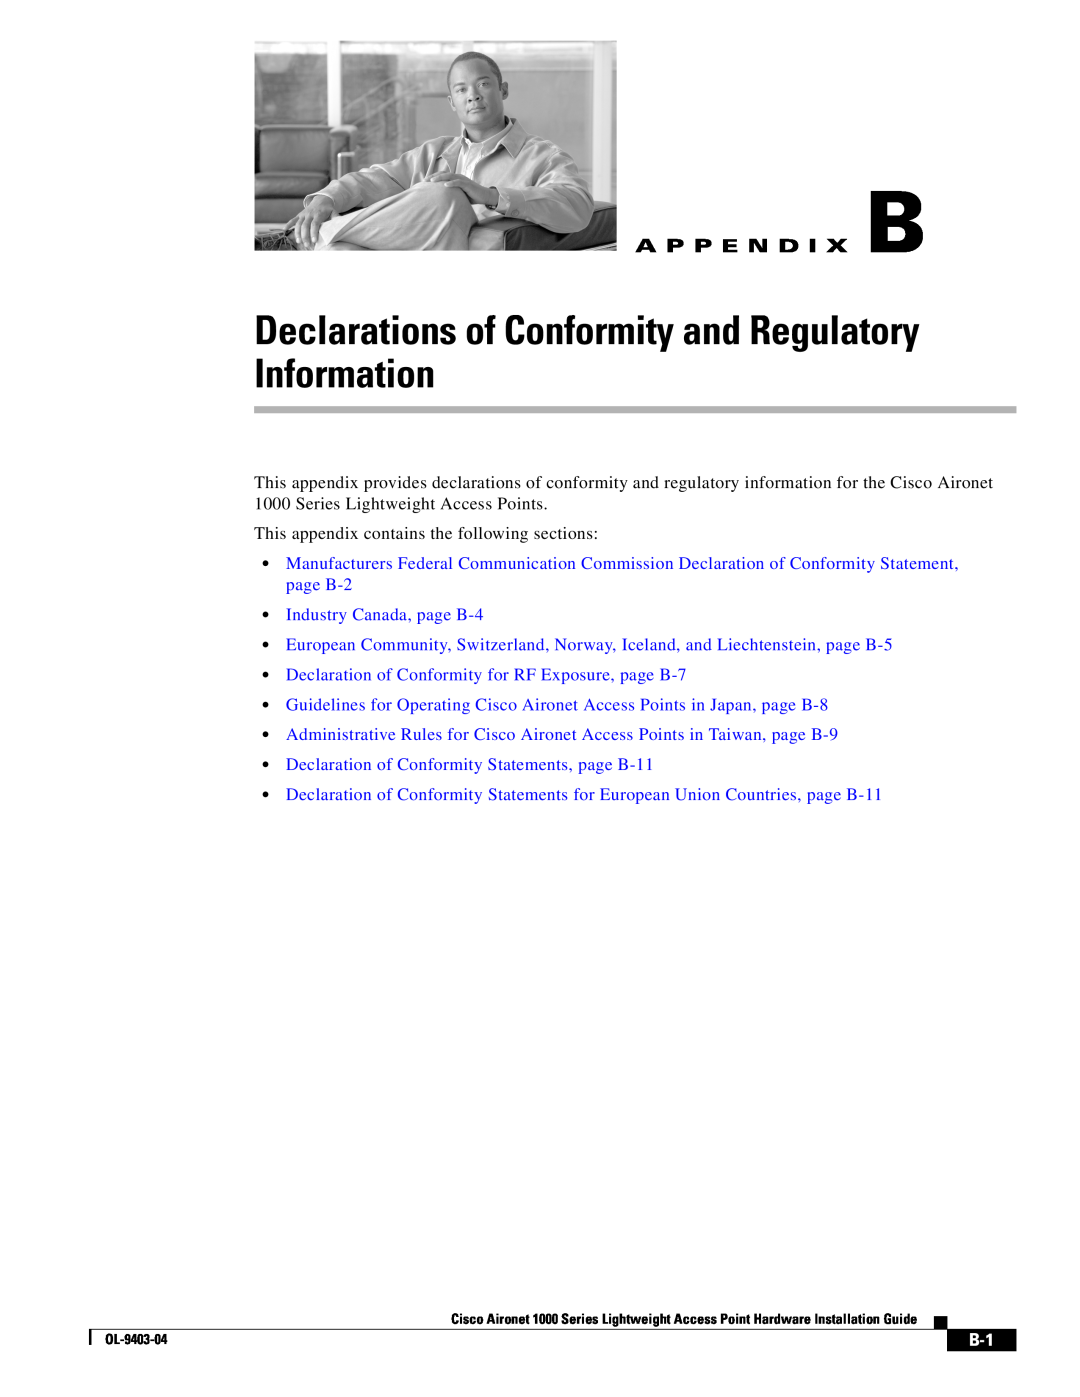 Cisco Systems 2000 appendix Declarations of Conformity and Regulatory Information, A P P E N D I X B 